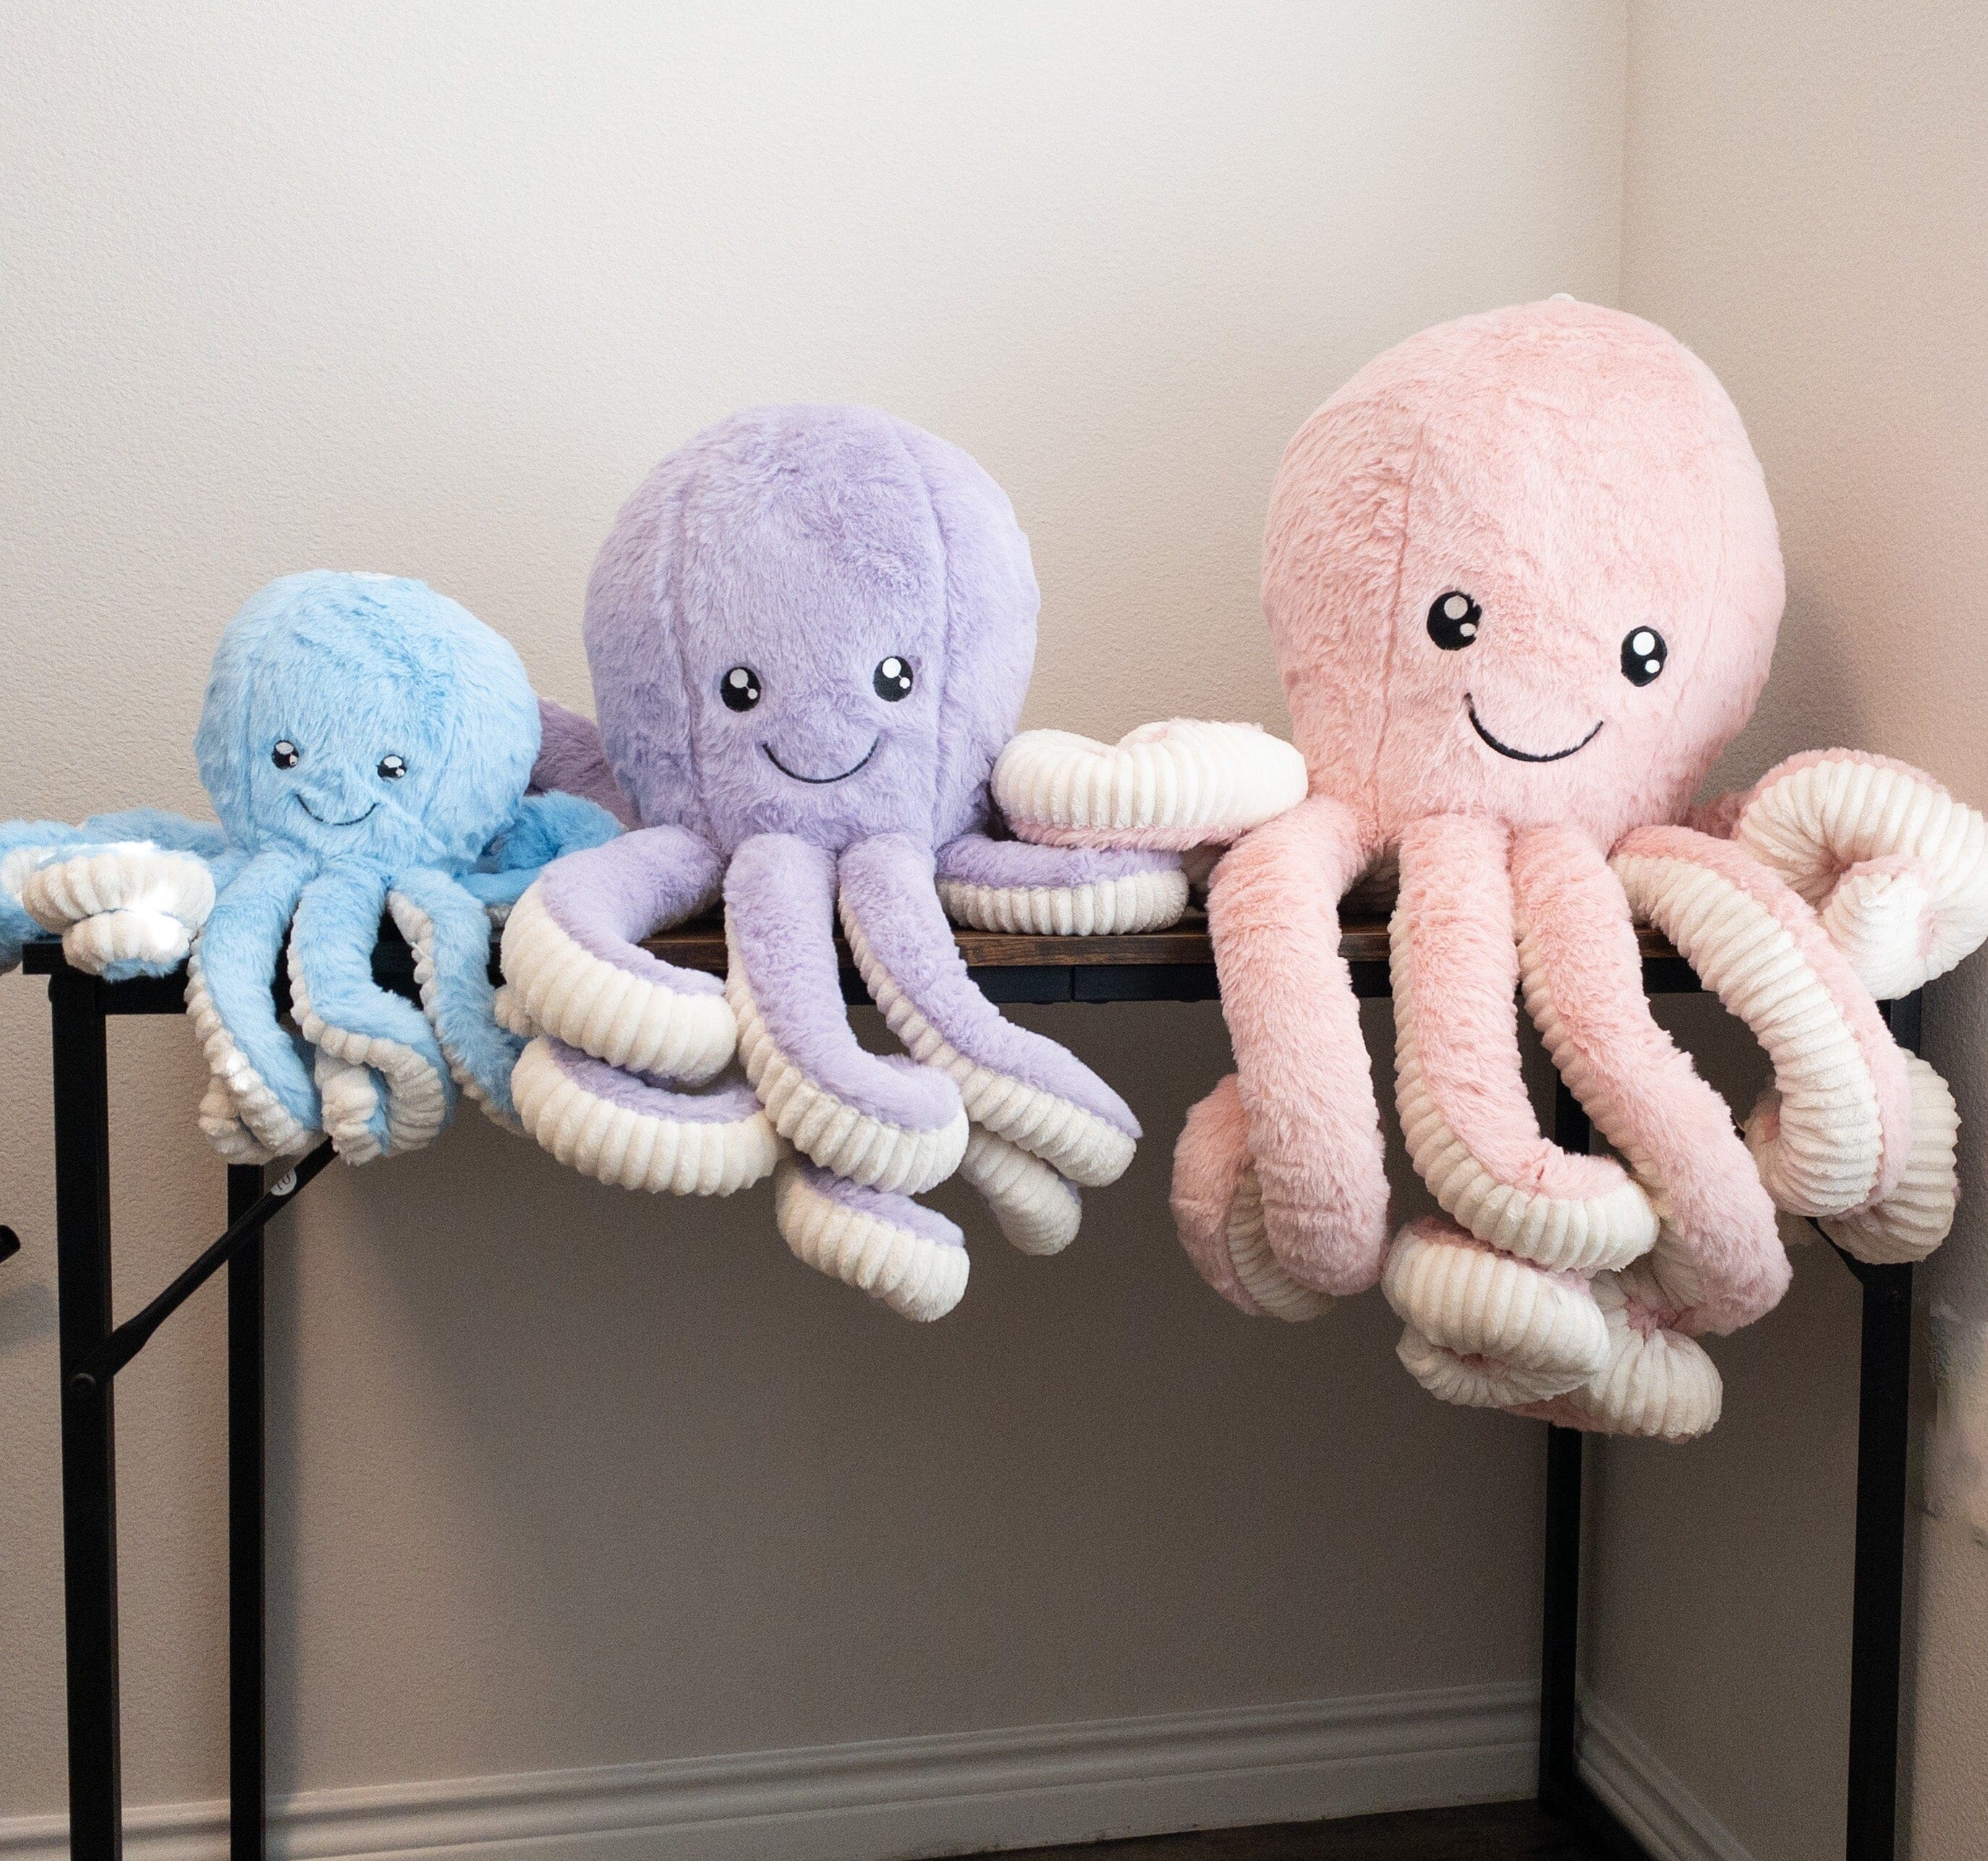 Octopus Plush The Autistic Innovator 